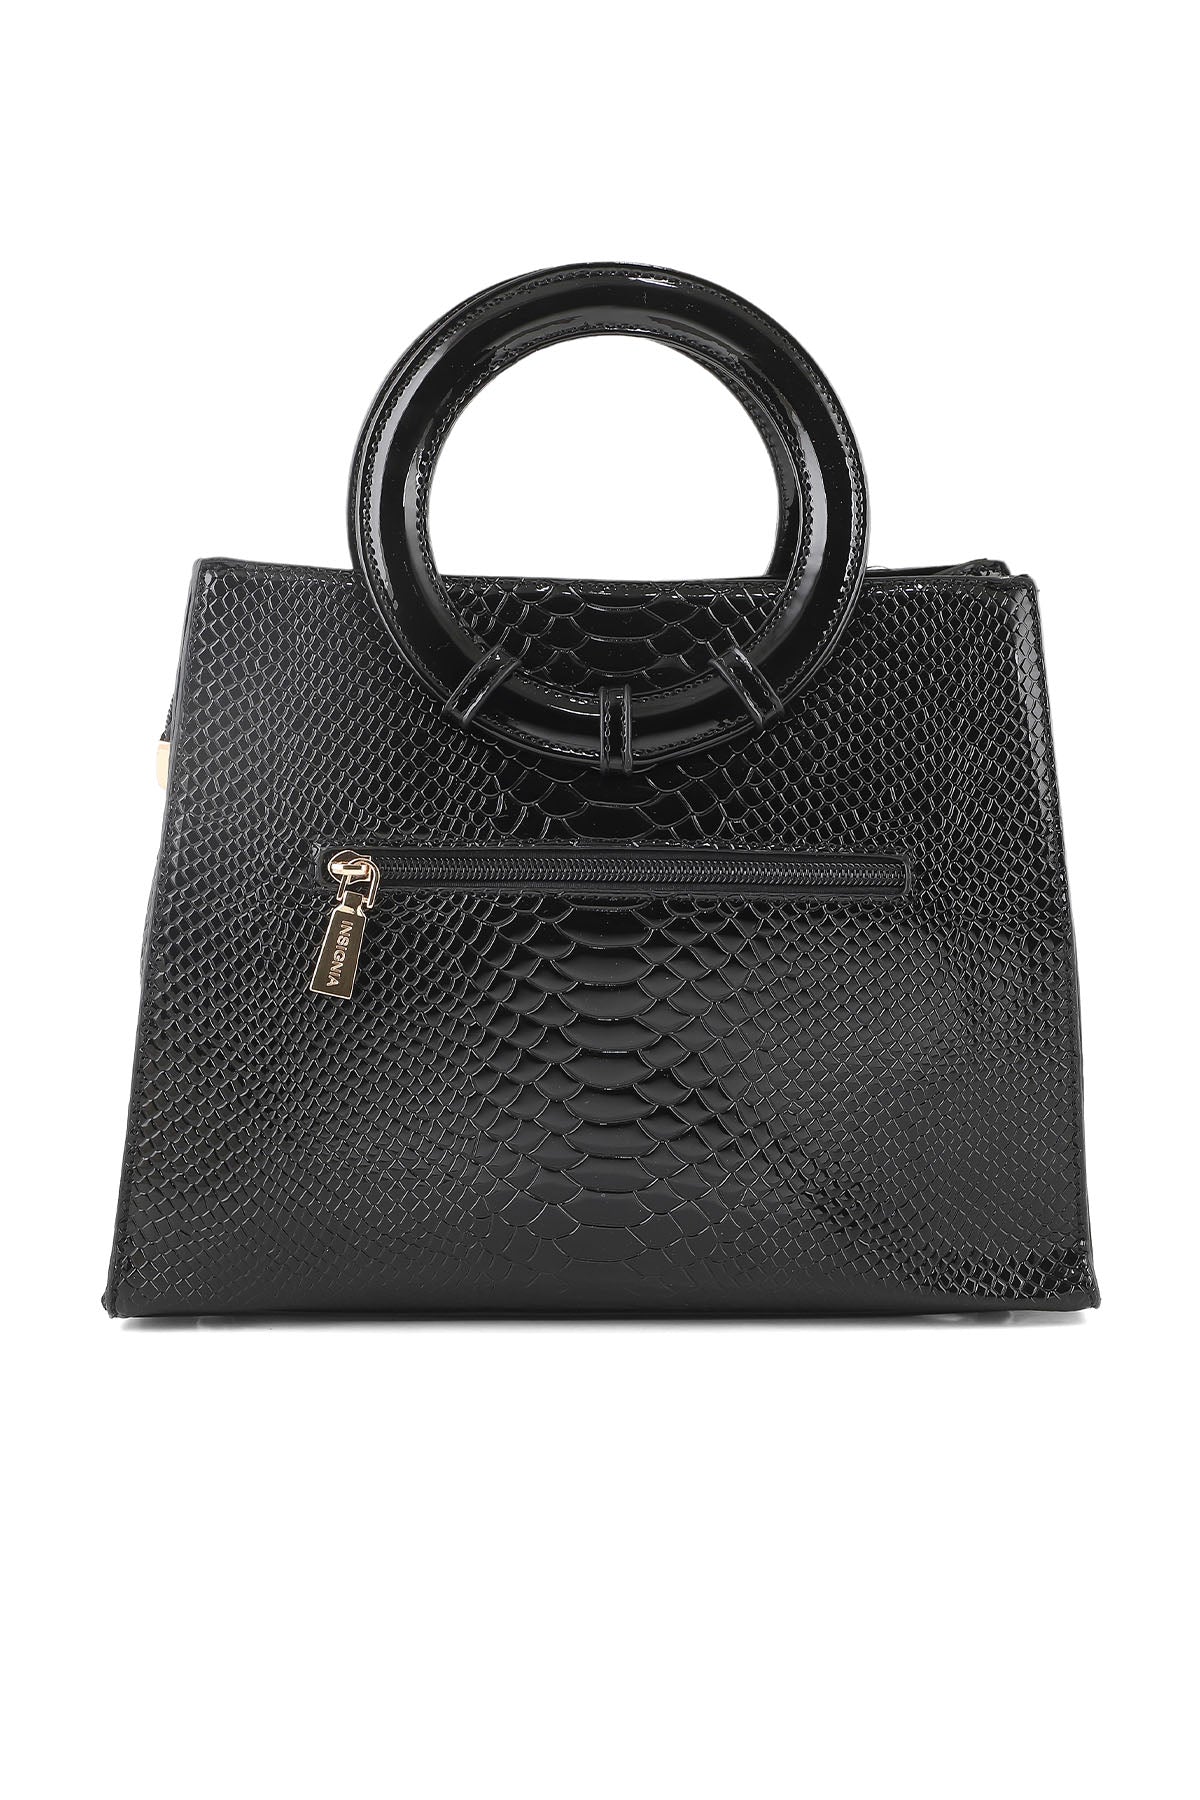 Top Handle Hand Bags B14996-Black